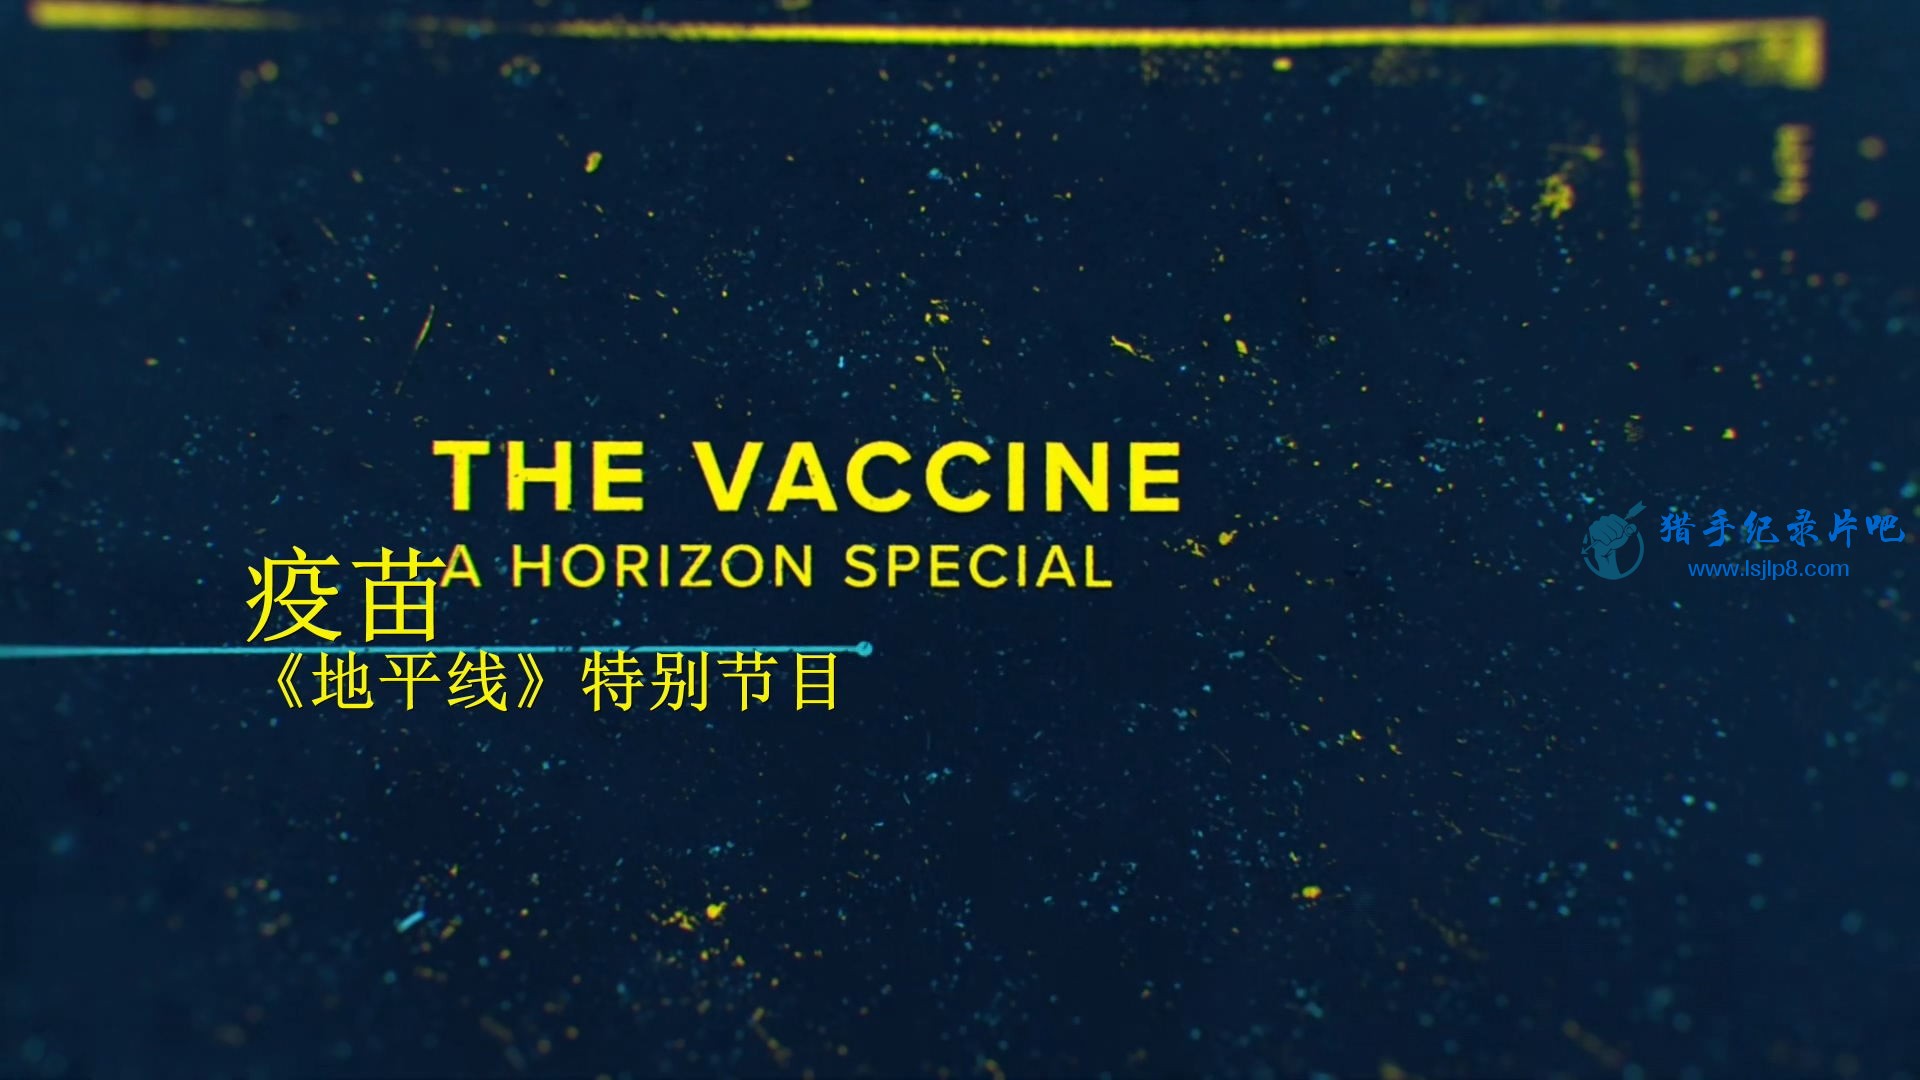 BBC.Horizon.2021.The.Vaccine.1080p.HDTV.x265.AAC.MVGroup.org.jpg